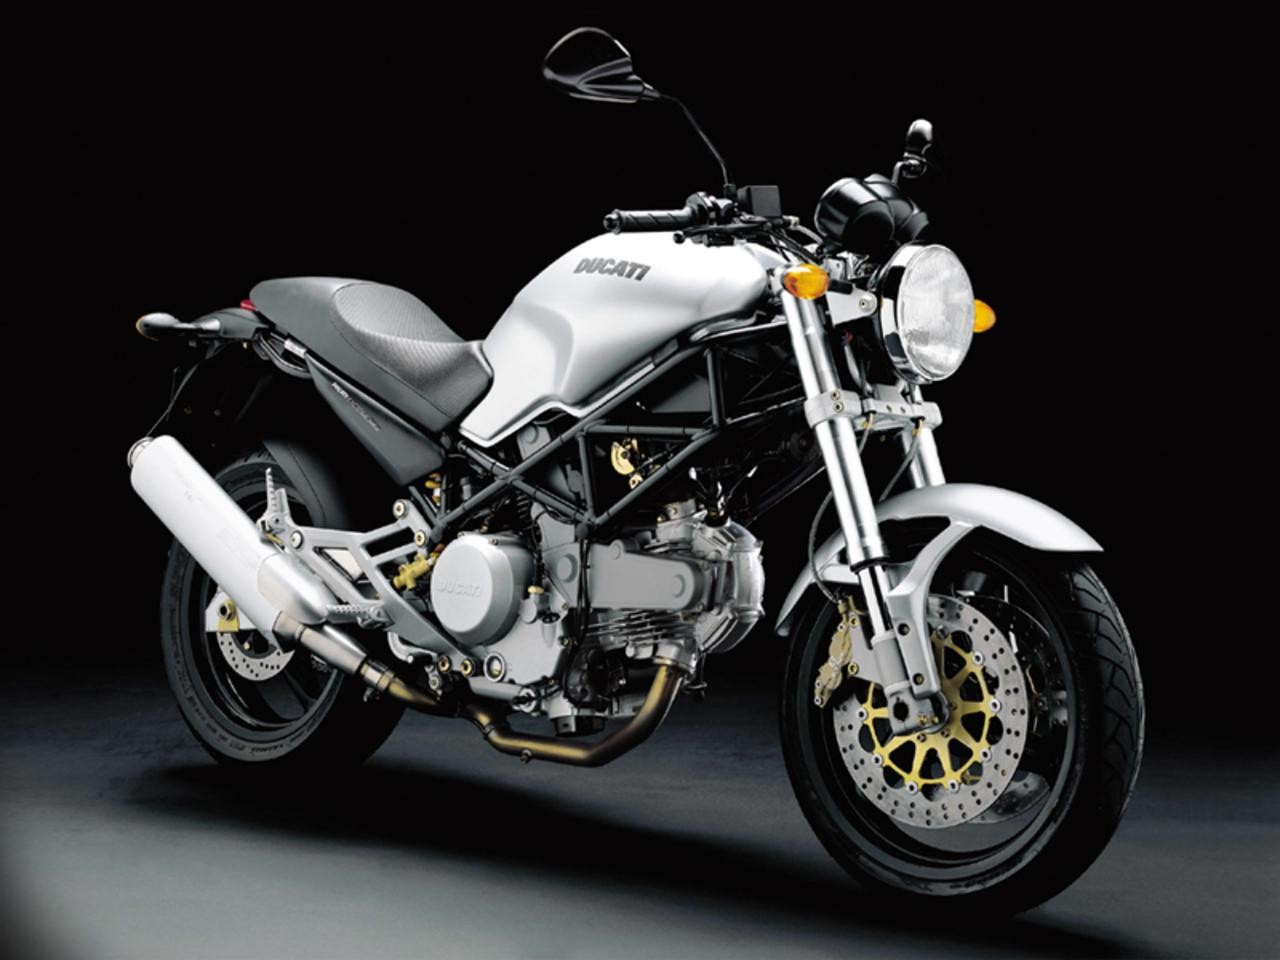 General 1280x960 Ducati motorcycle vehicle Silver Motorcycles dark background Italian motorcycles Volkswagen Group